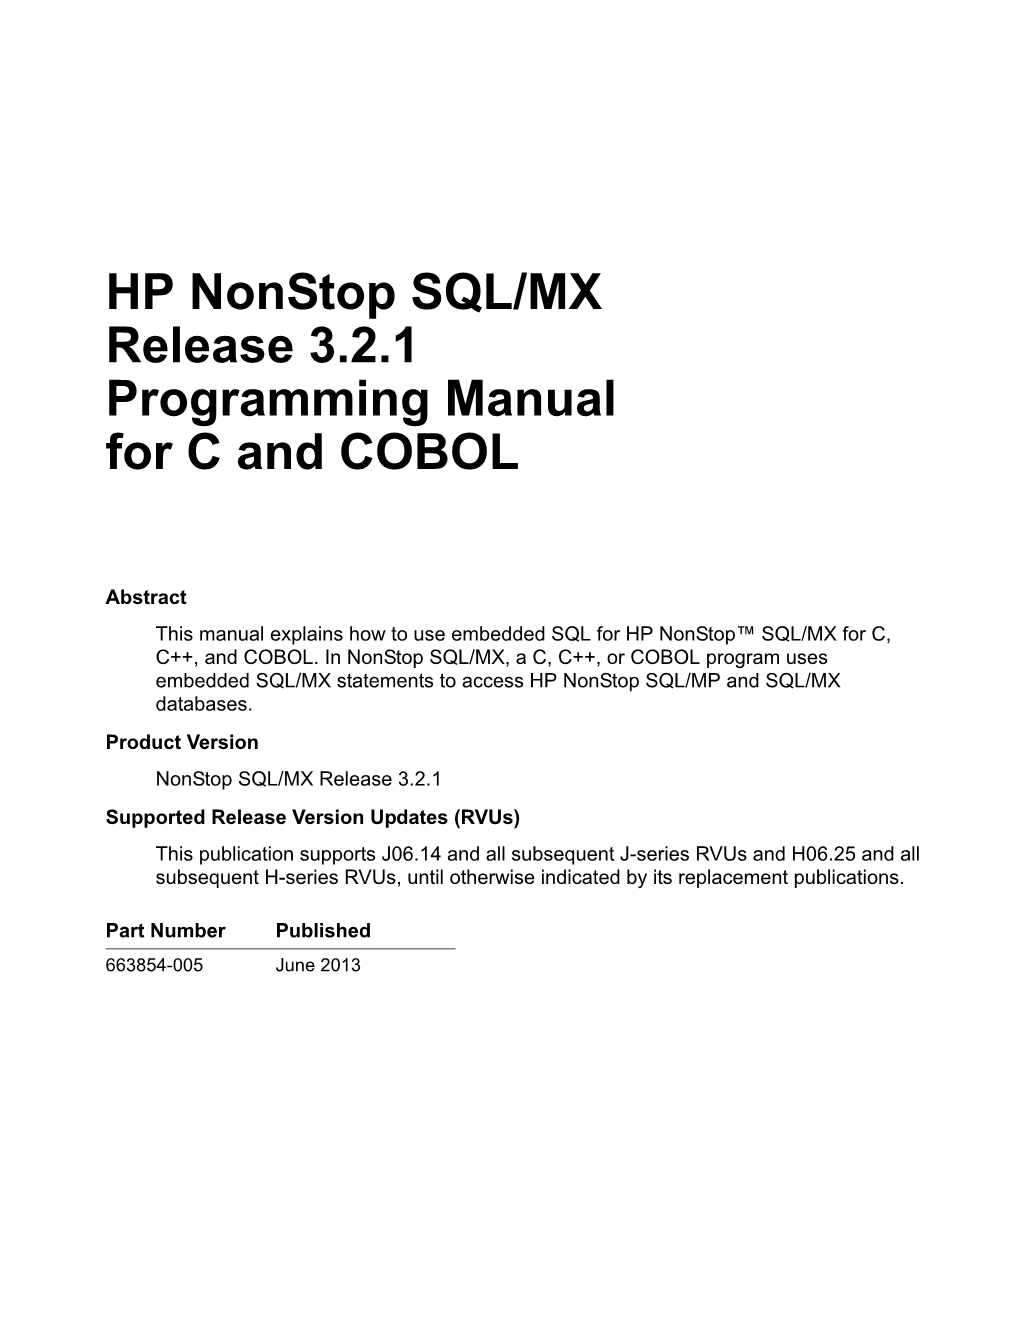 SQL/MX 3.2.1 Programming Manual for C and COBOL